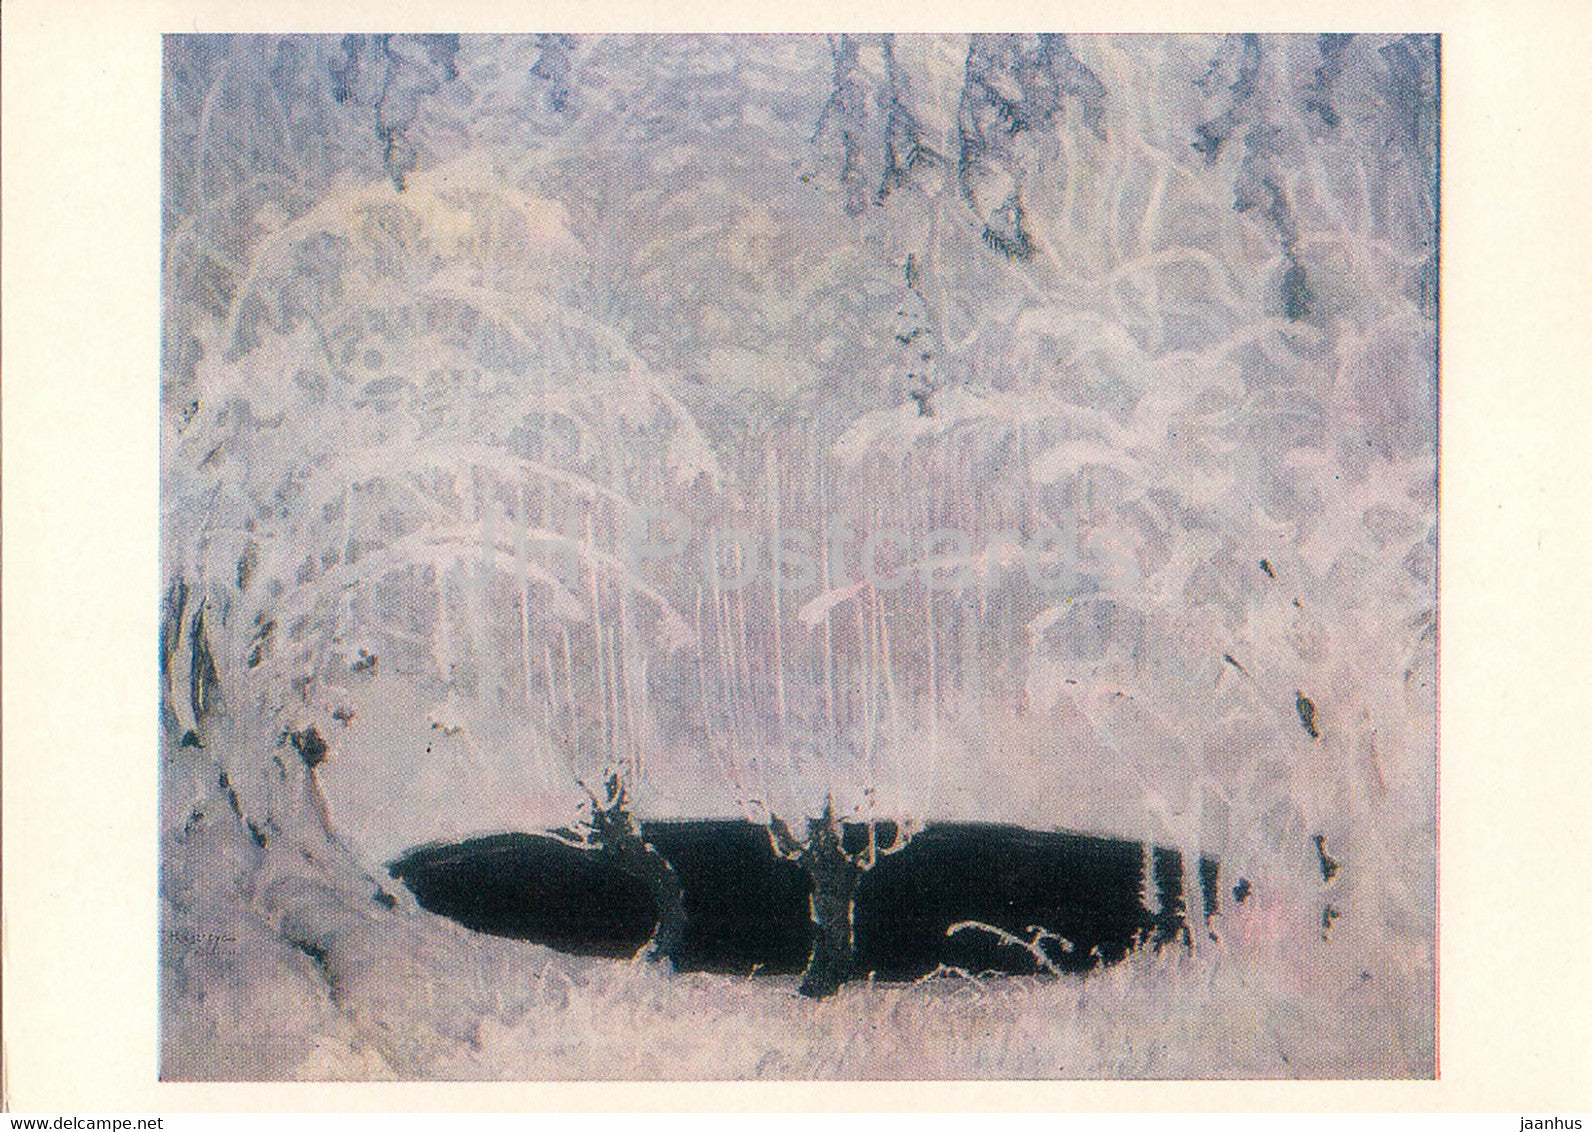 painting by Ferdynand Ruszczyc - Winter Fairy Tale - Polish art - 1981 - Russia USSR - unused - JH Postcards